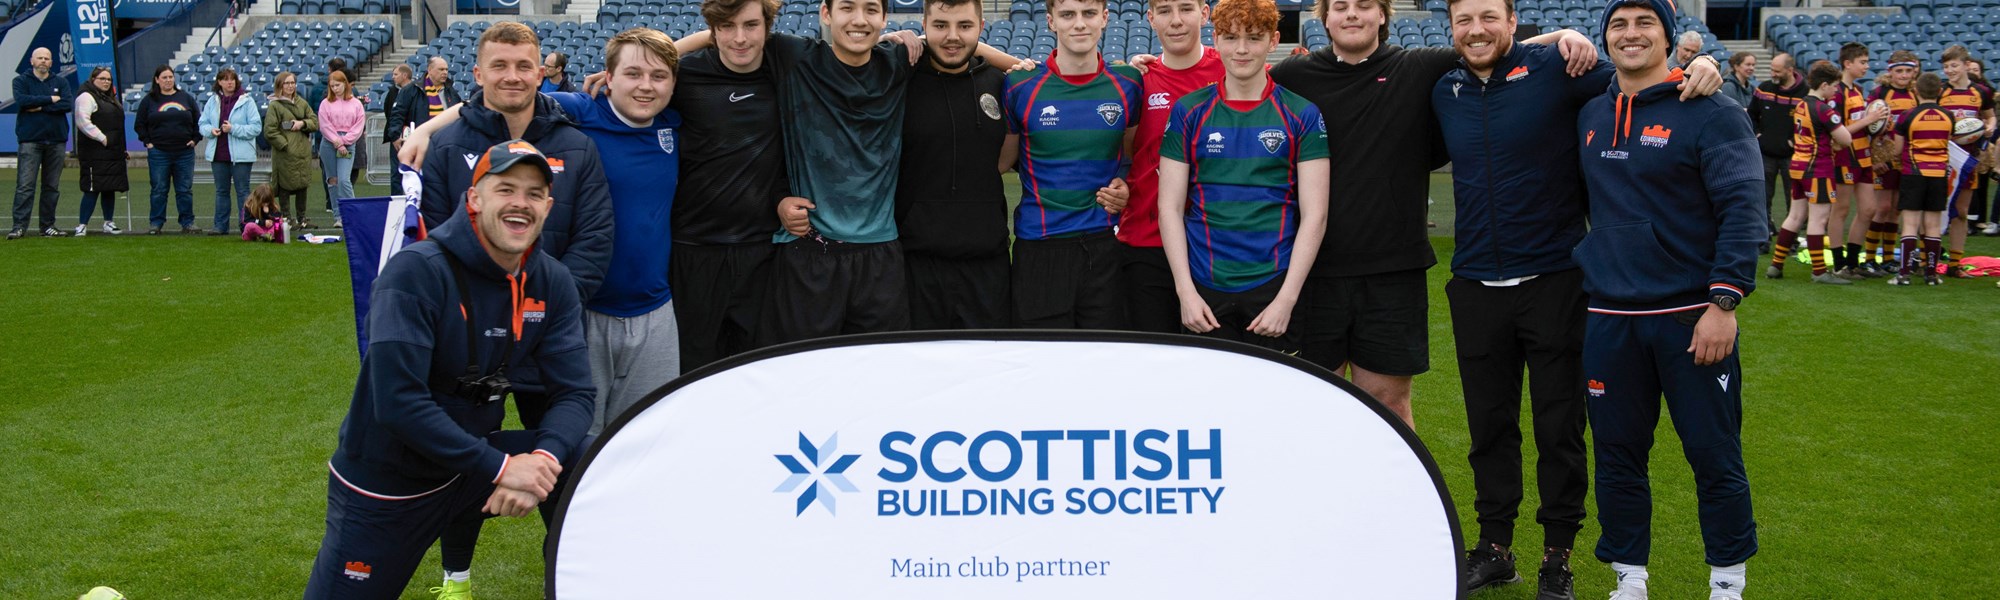 Background image: Junior Sides Train With Edinburgh Rugby Star Hamish Watson at BT Murrayfield